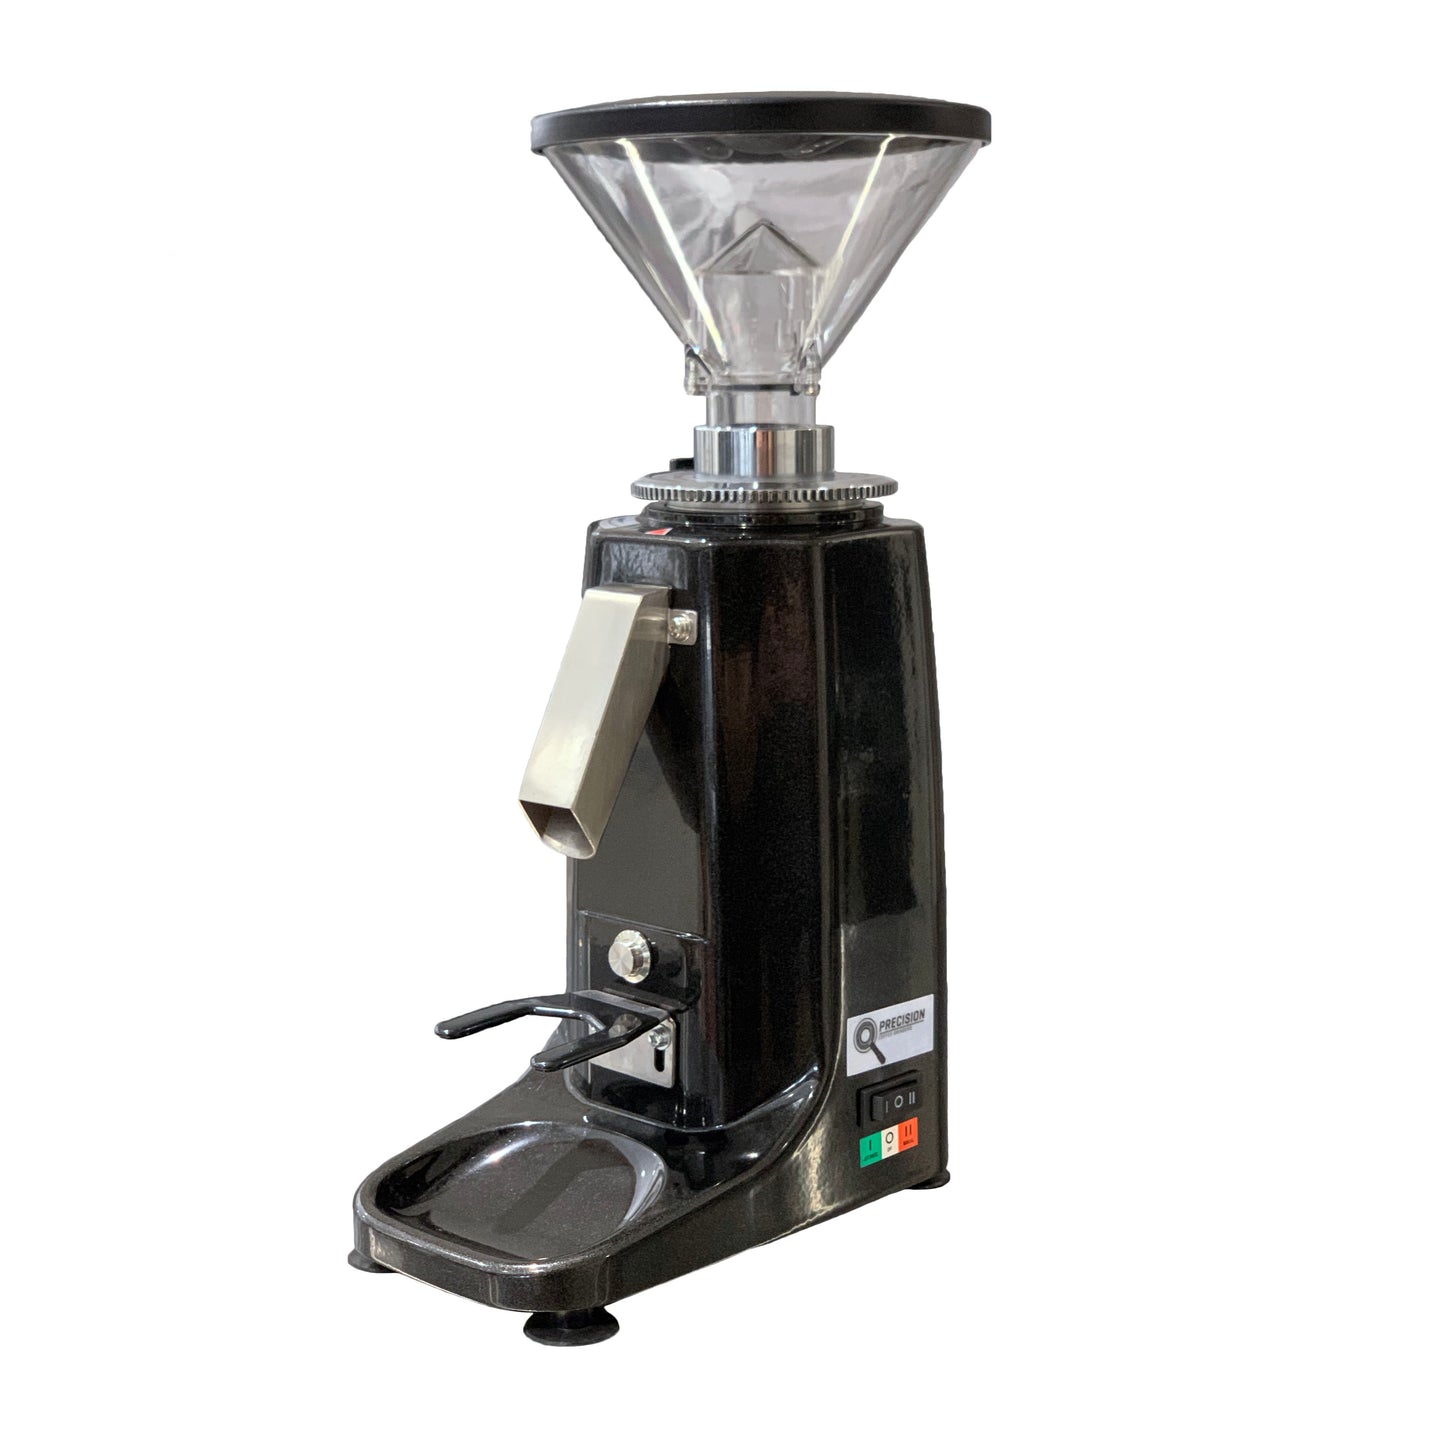 GSP (Espresso) On-Demand Coffee Grinder